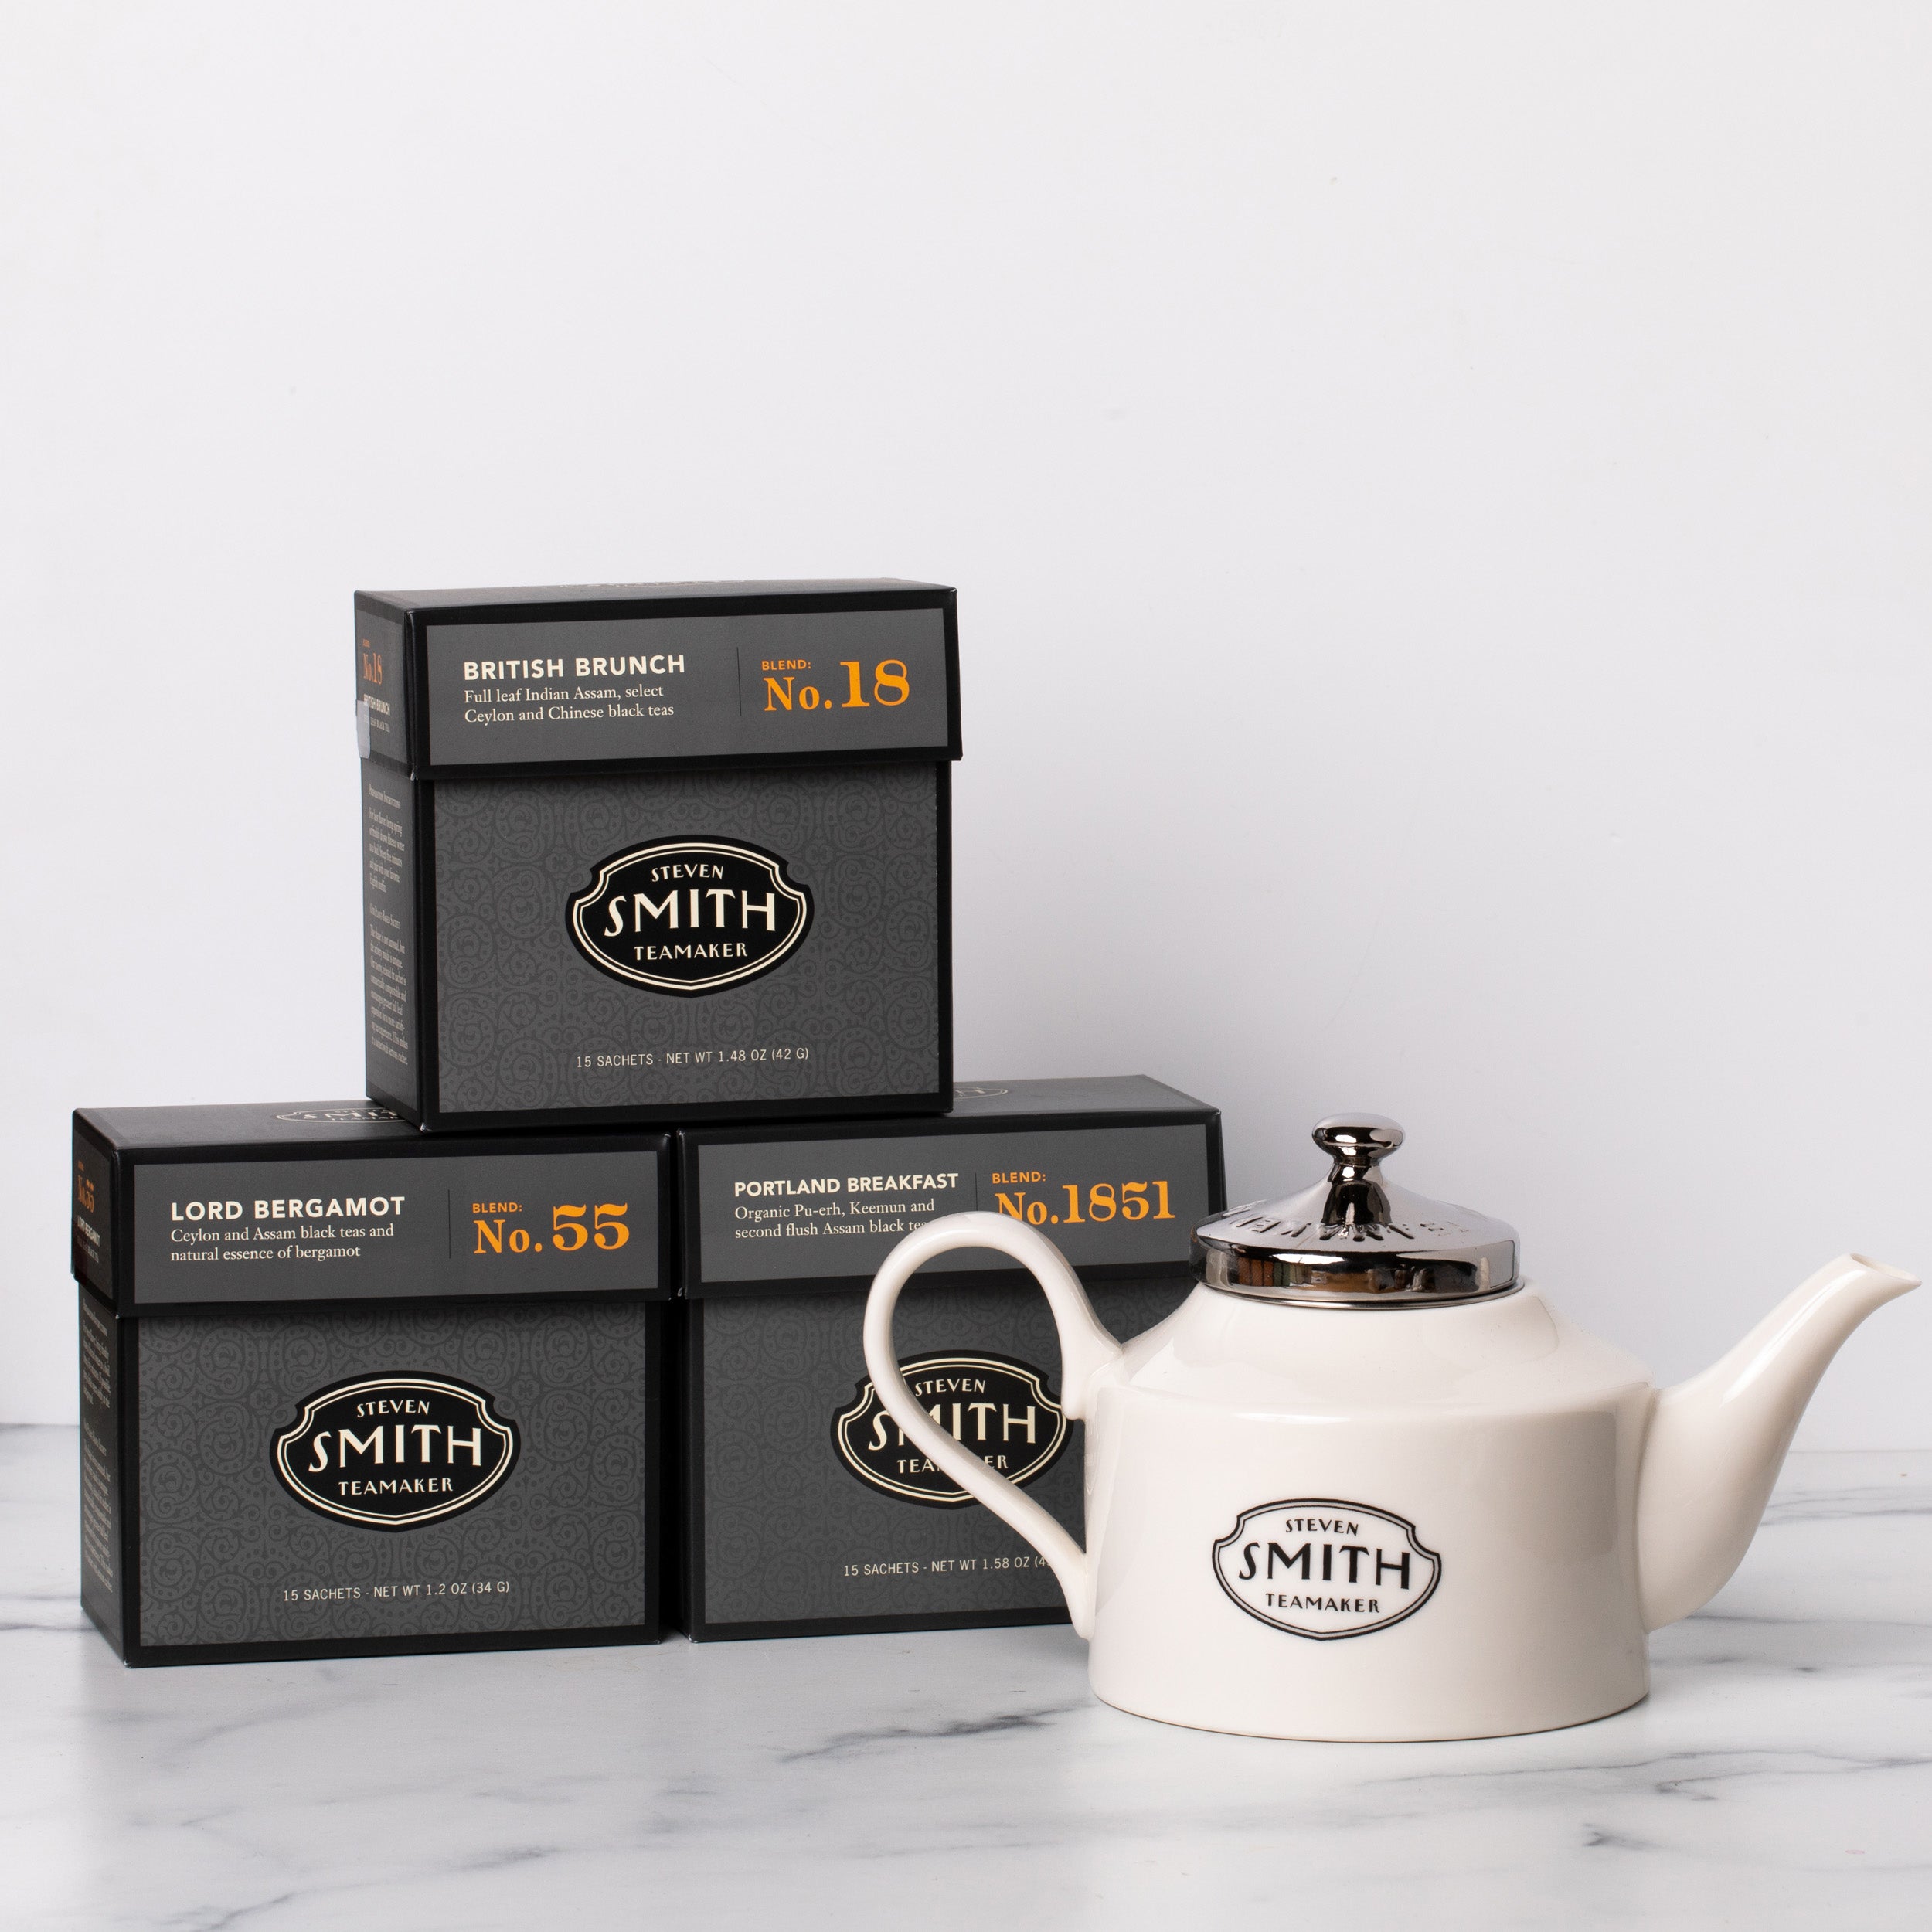 Three cartons of black tea with a white porcelain teapot.